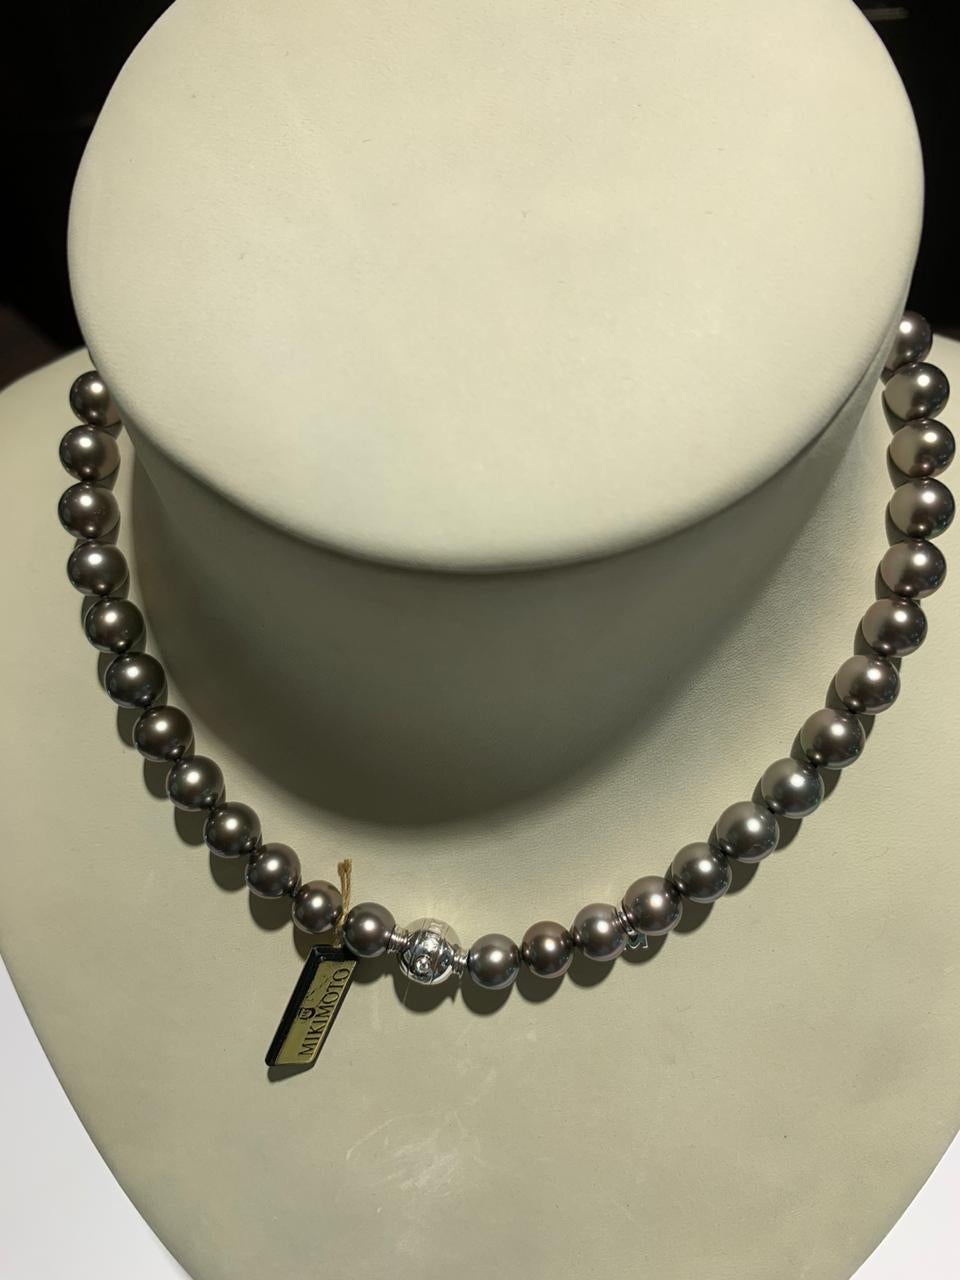 Mikimoto Black South Sea Pearl Necklace 10.9X8.3MM A+ 17 INCHES 